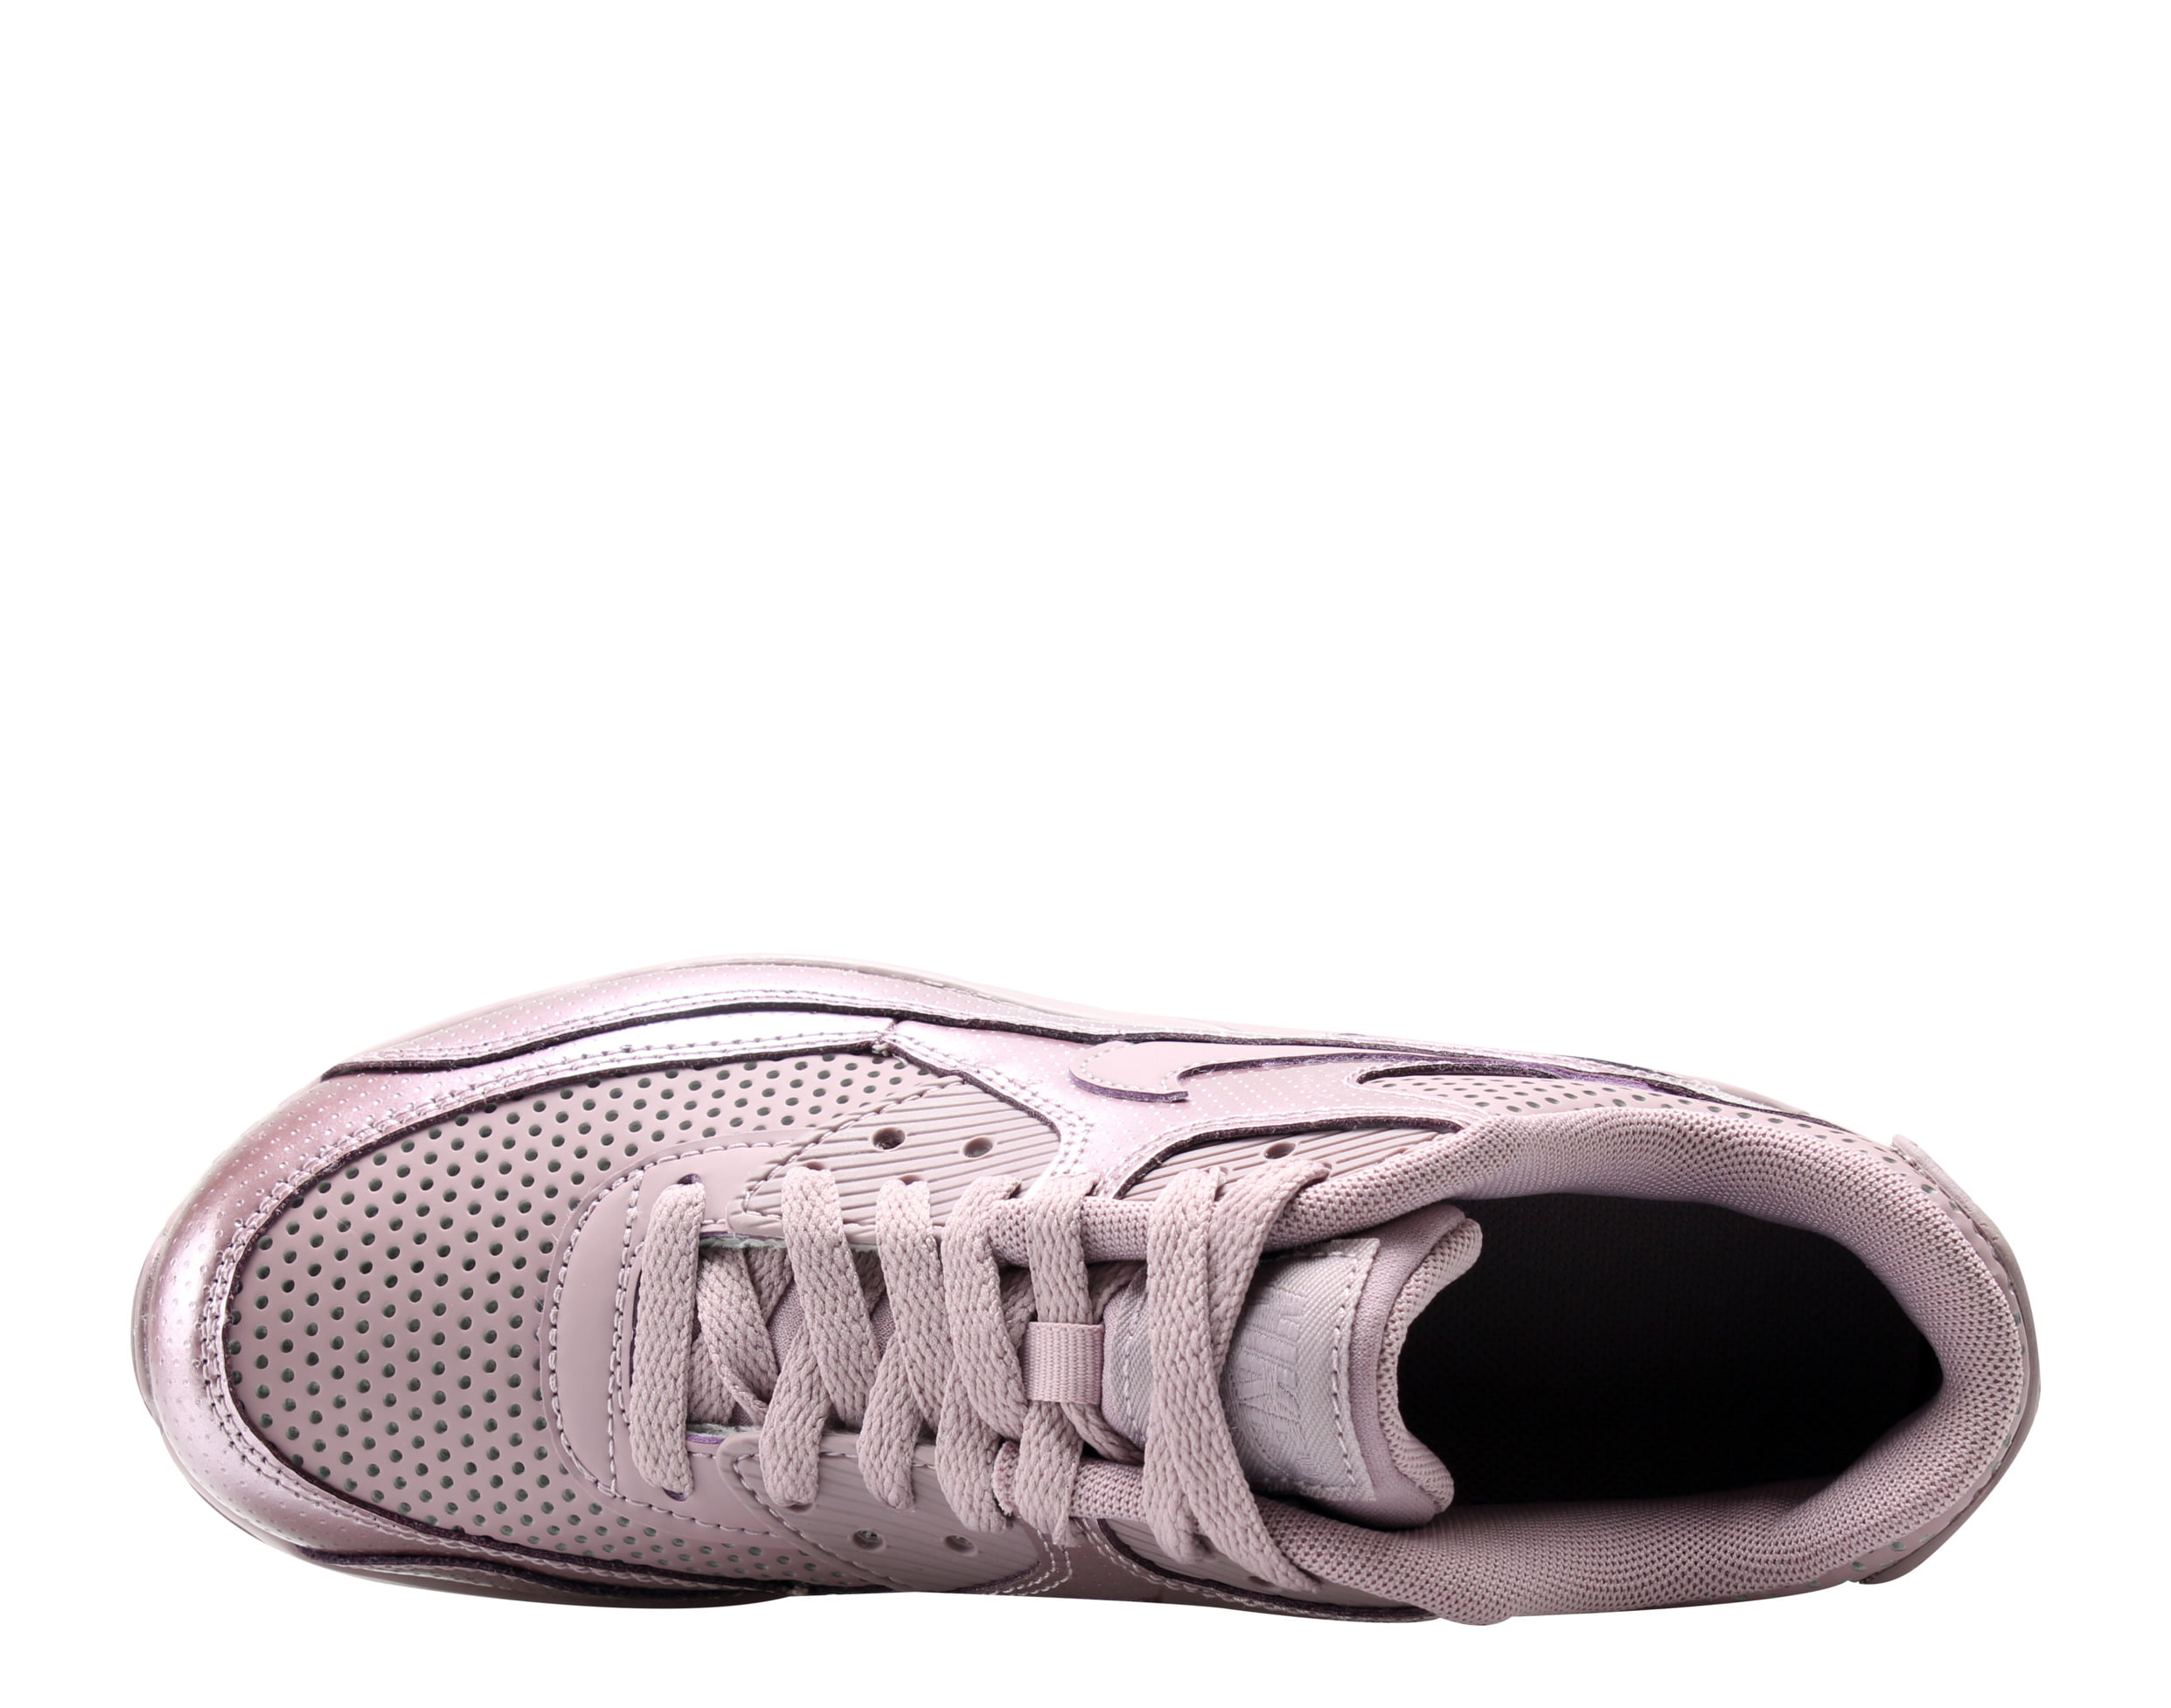 Nike Air Max 90 Premium Neutral Olive 700 155 203 Sneaker